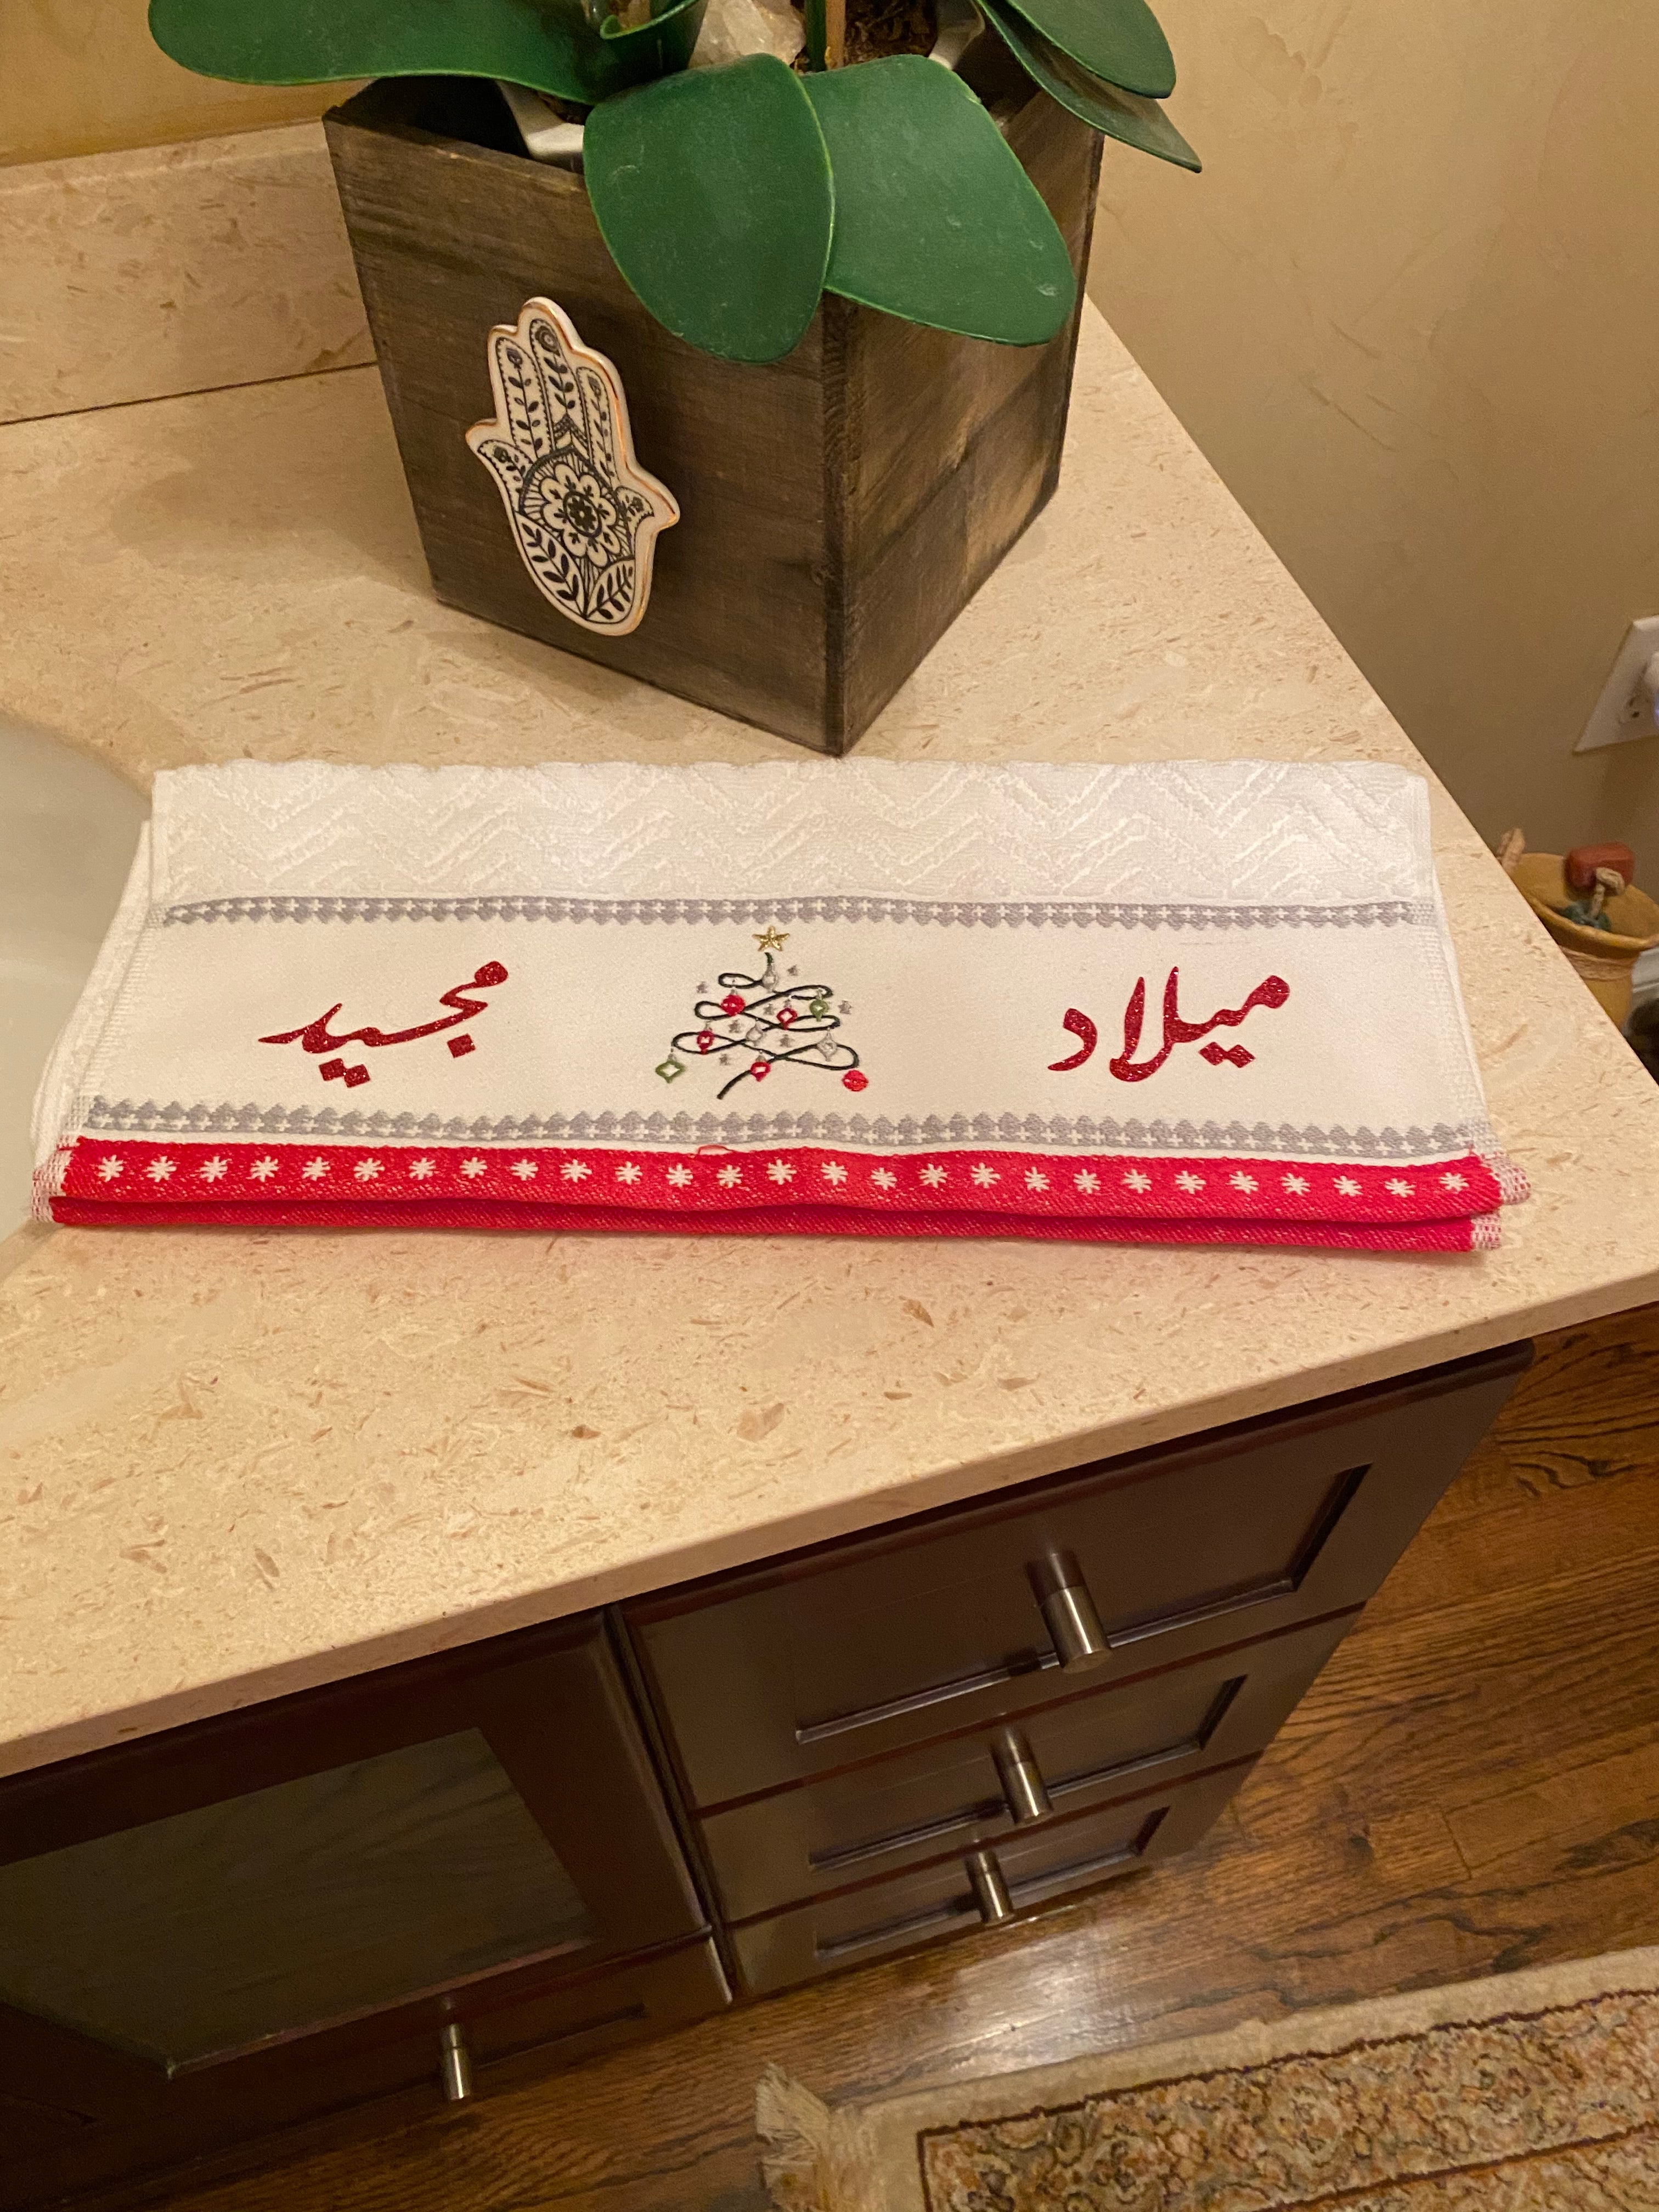 Christmas towels, cotton towels